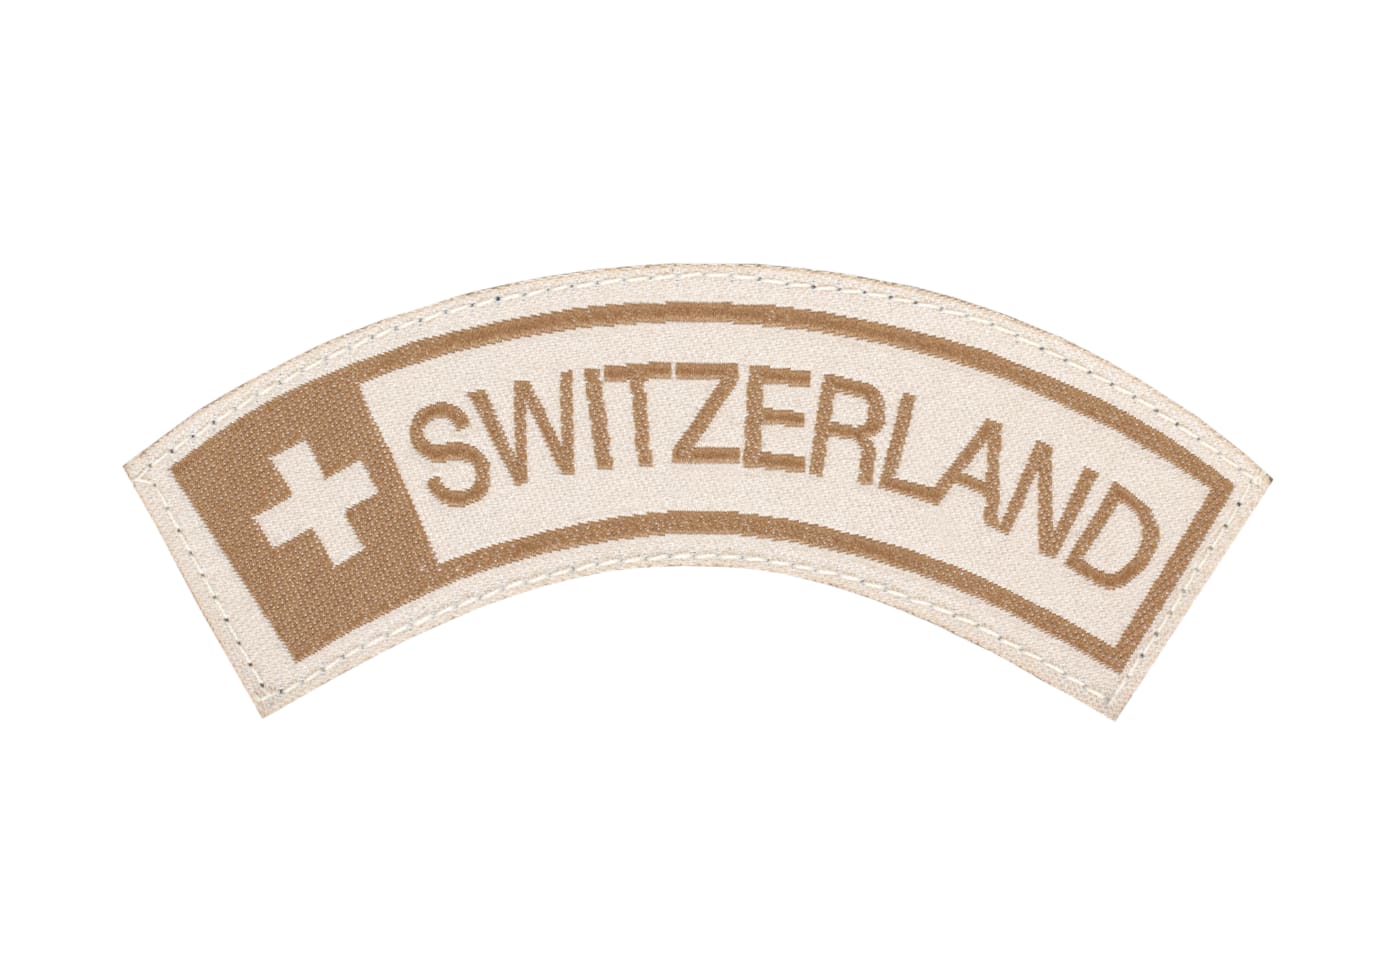 Clawgear Switzerland Tab Patch